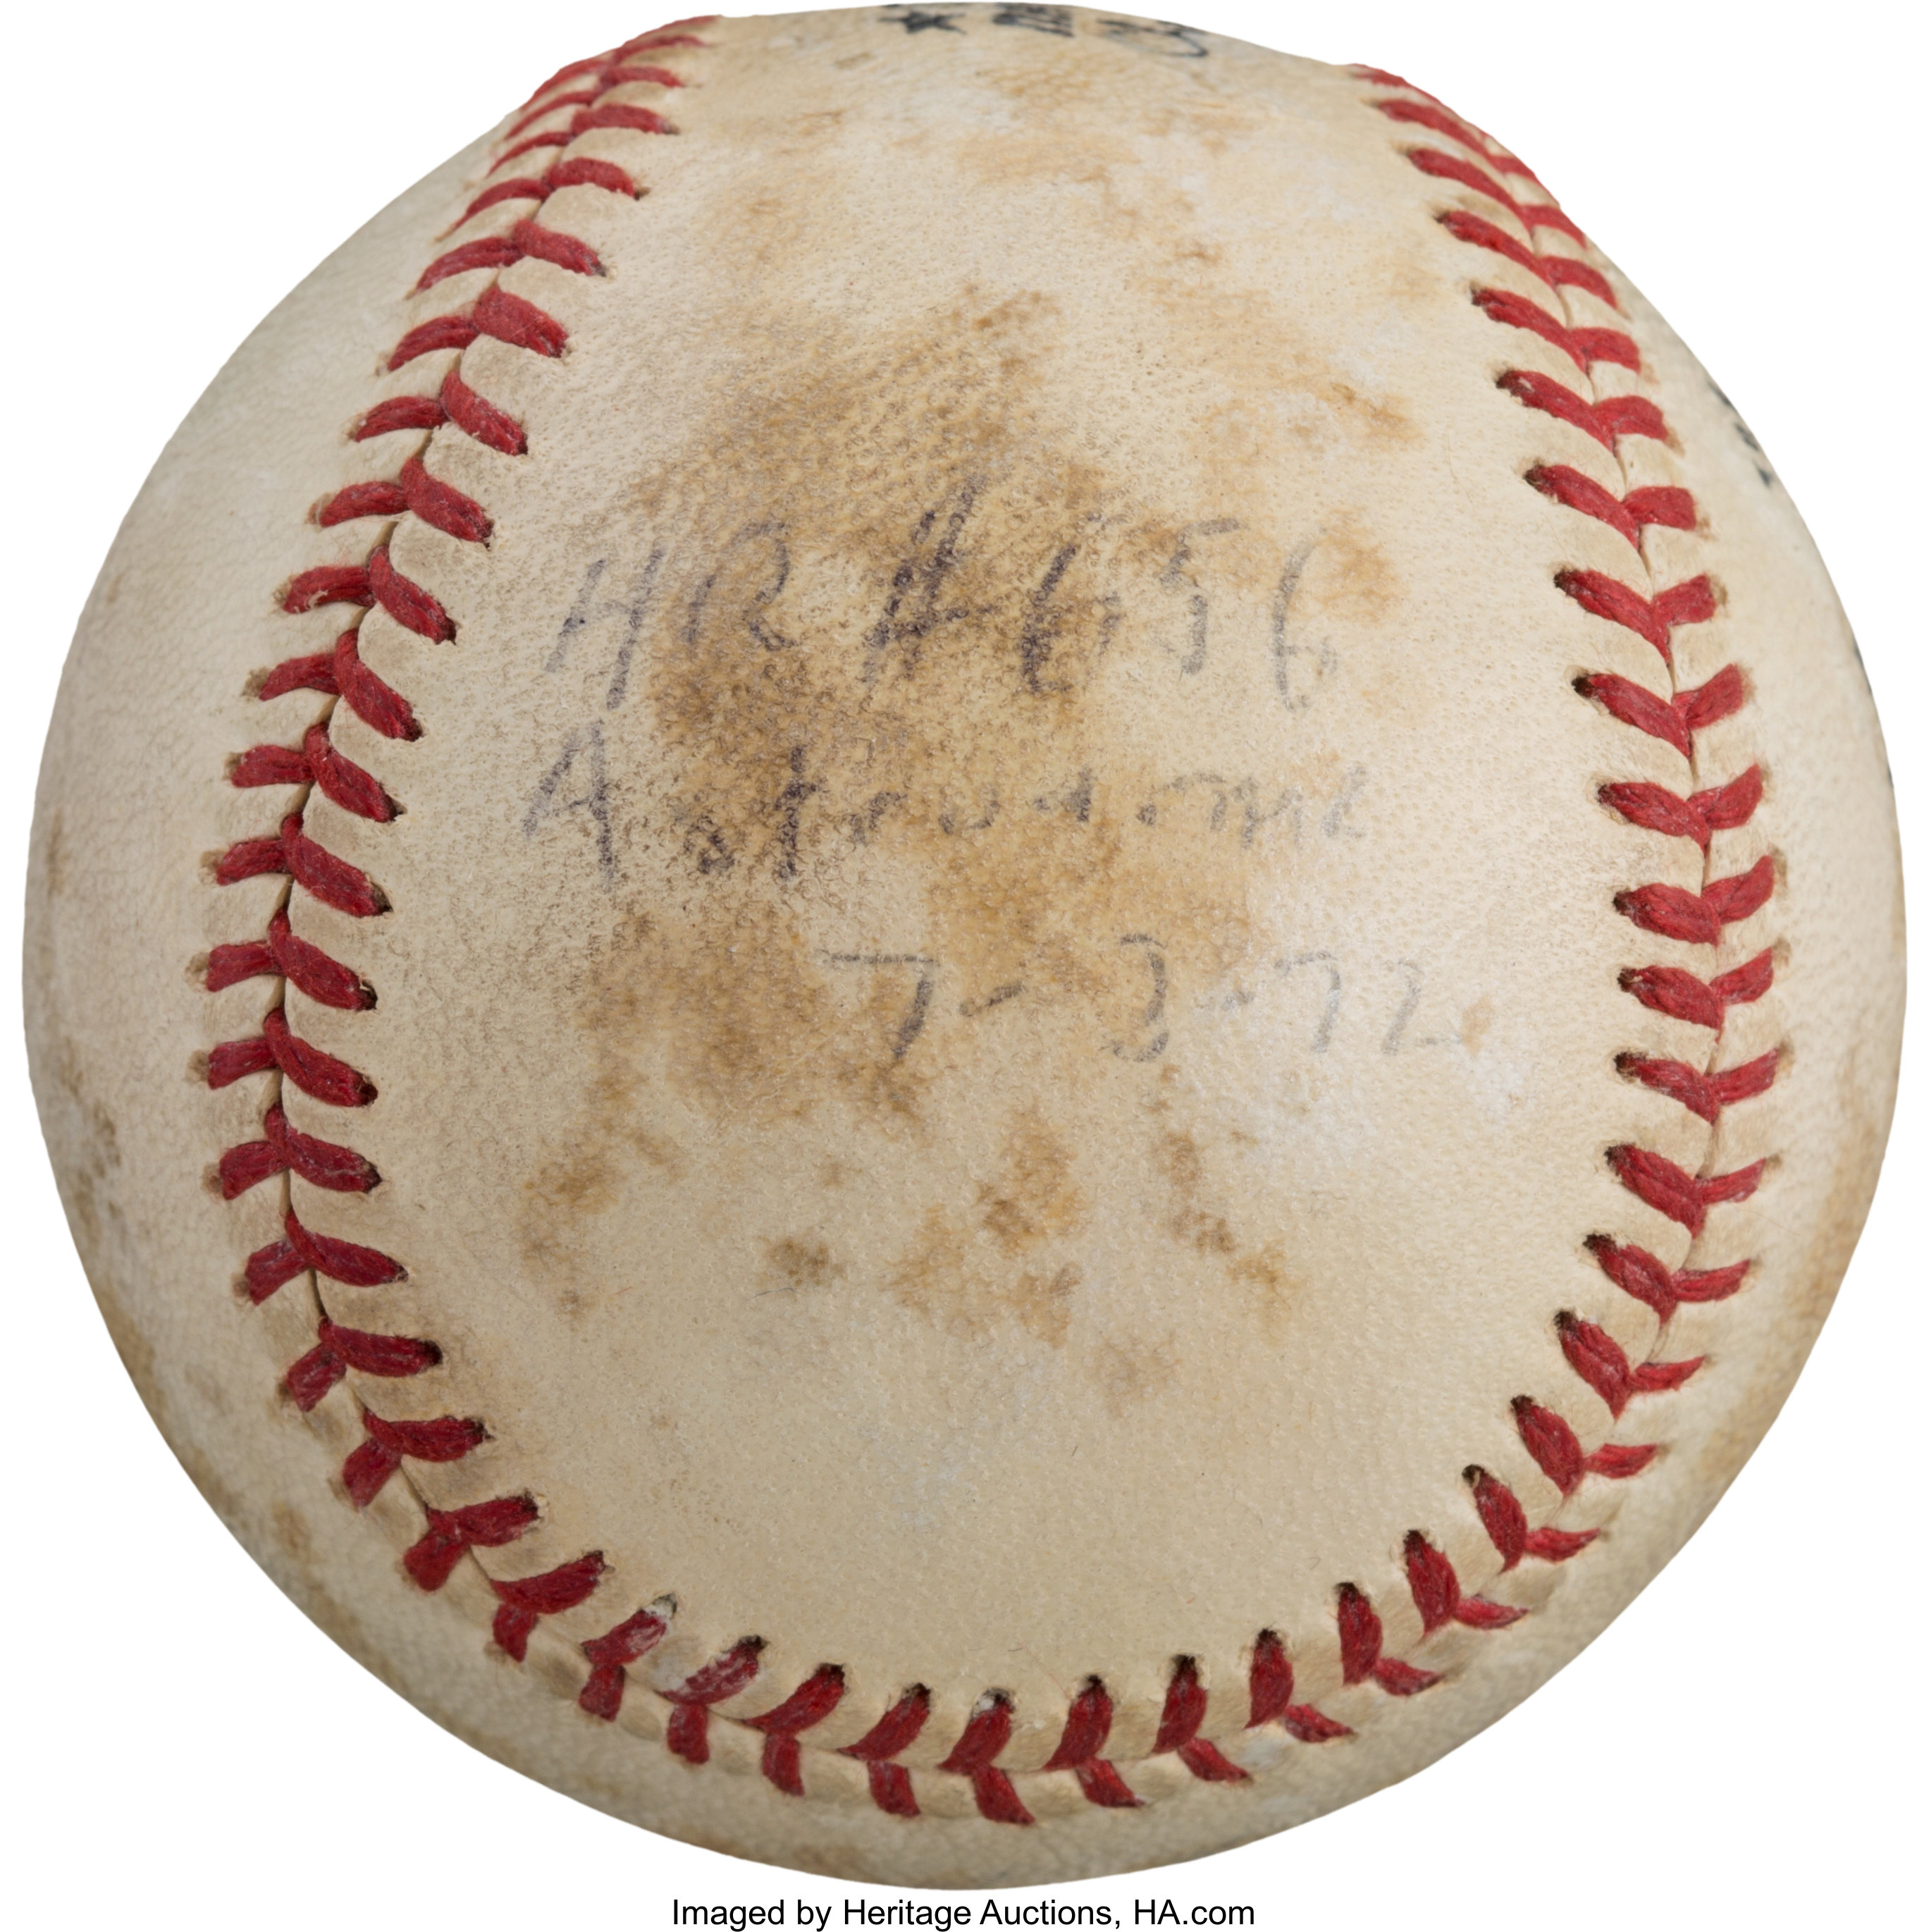 Lot Detail - 1972 Hank Aaron Atlanta Braves Game-Used Autographed